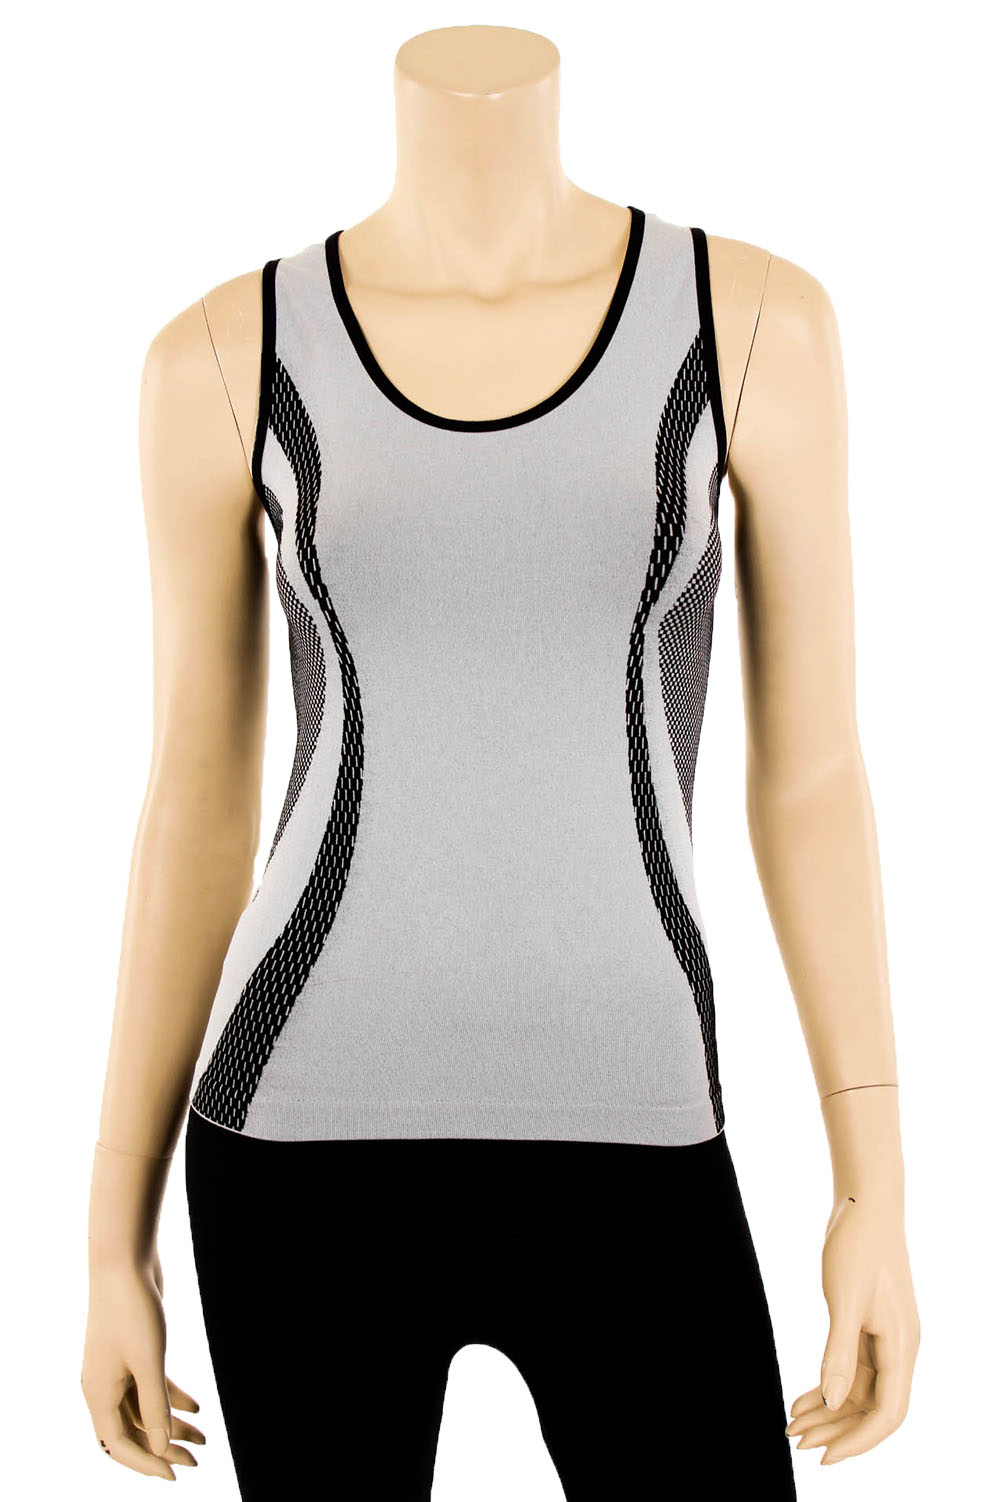 Womens Racerback Tank Top Workout Gym Sport Yoga Seamless Stretch One Size S M L Ebay 6654